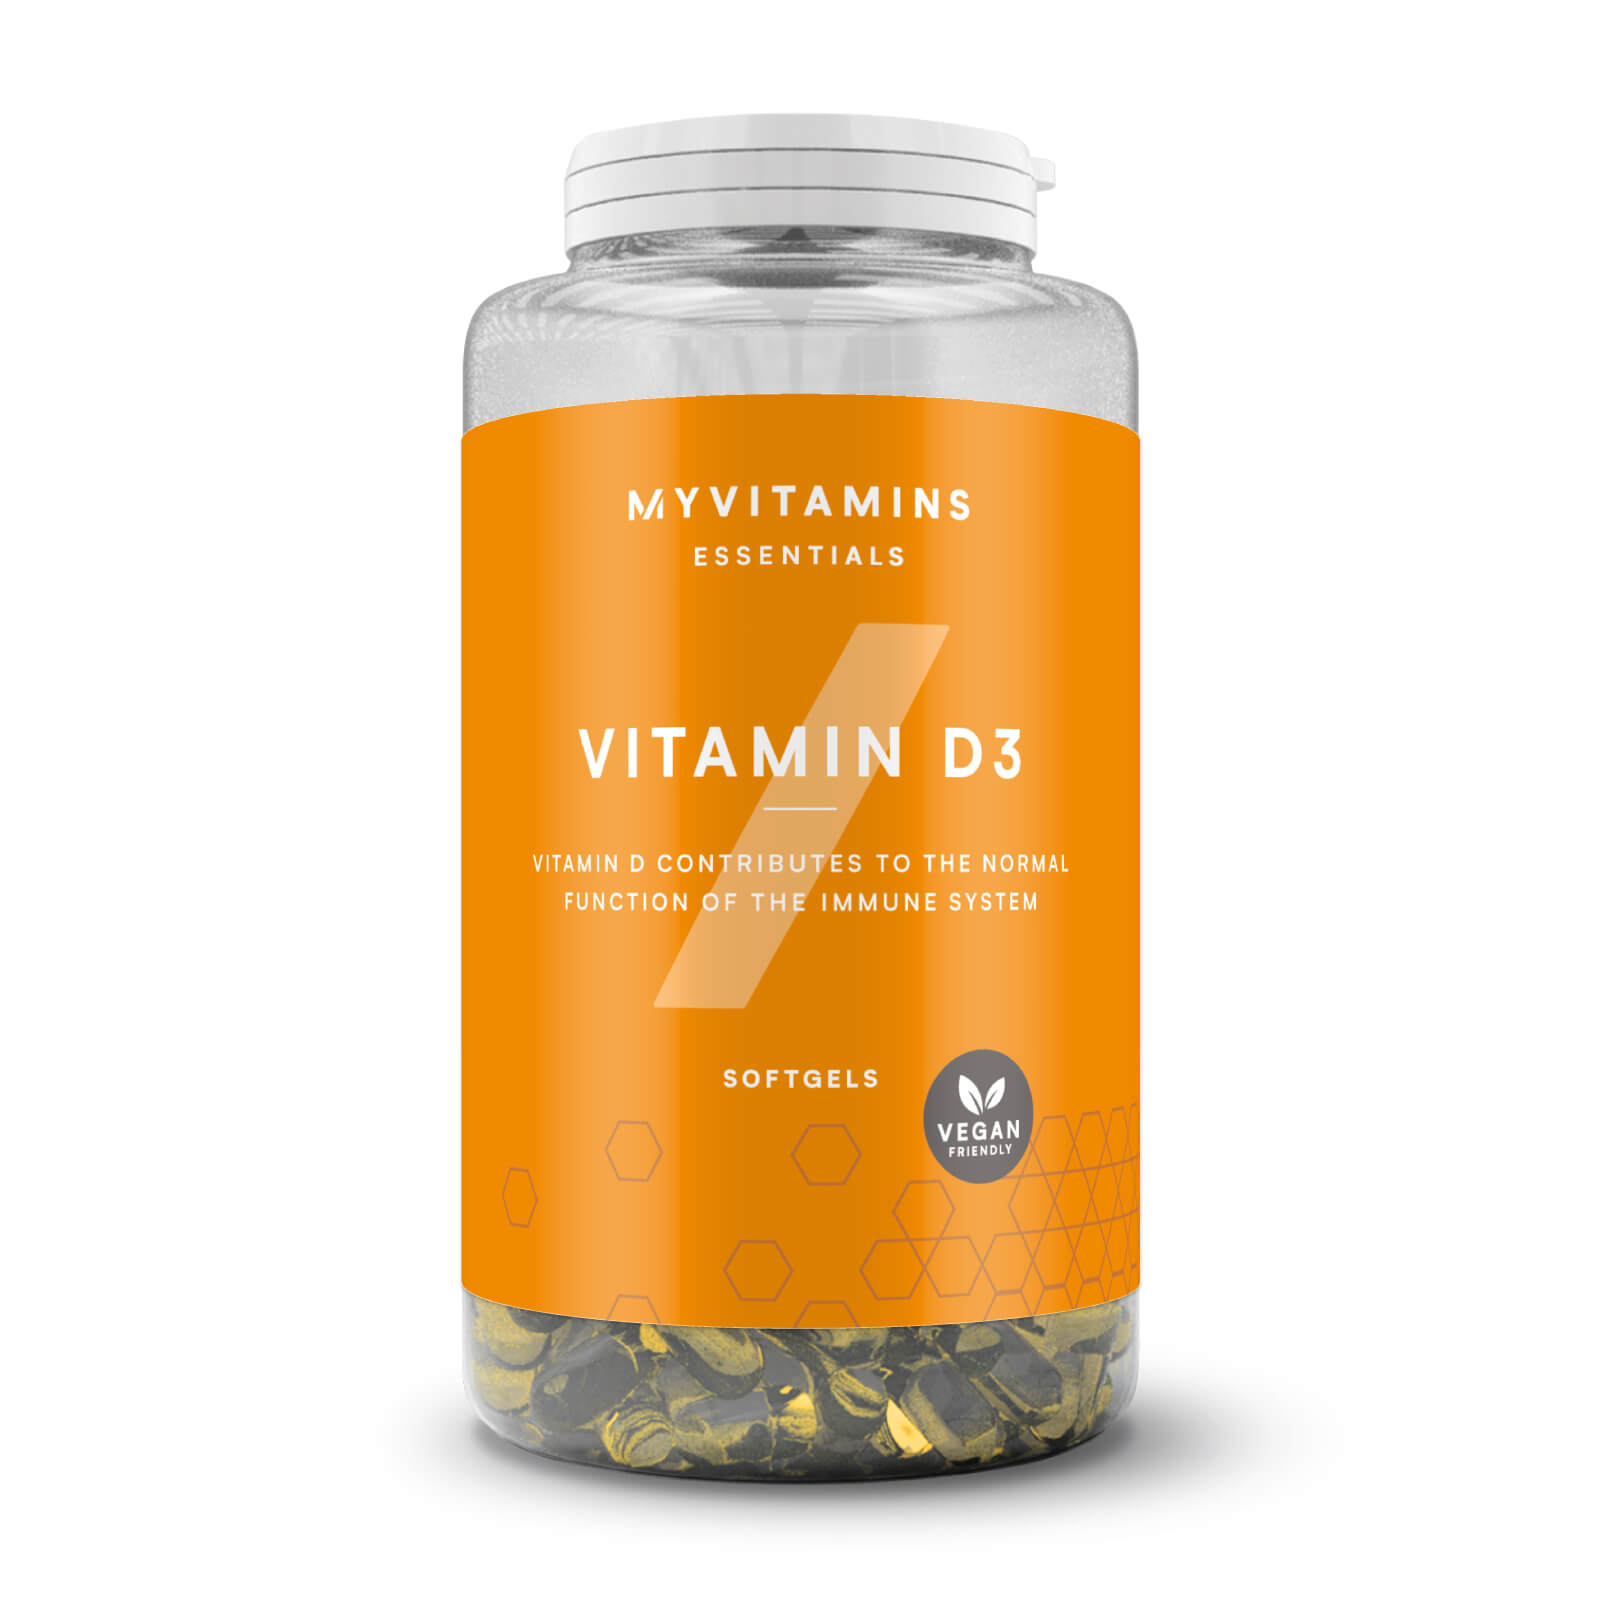 Myvitamins Vegan Vitamin D Softgels - 180Softgels - Unflavoured